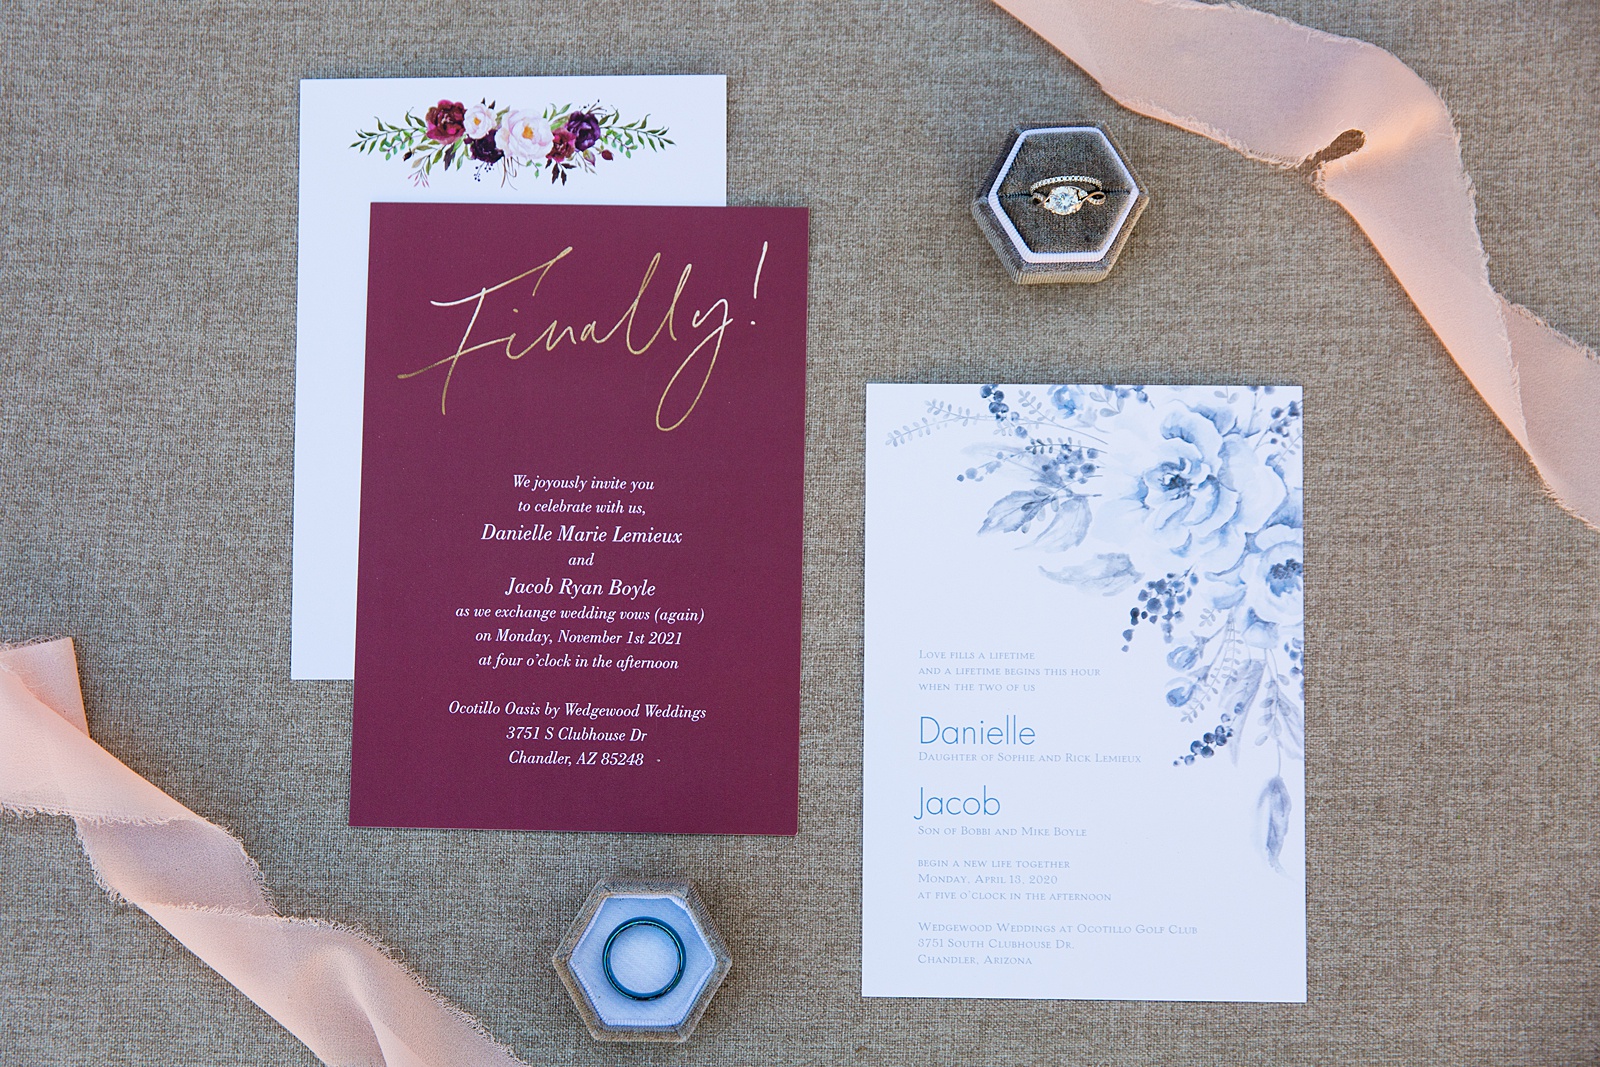 Maroon and White wedding invitation suite with wedding rings by Arizona wedding photographer PMA Photography.